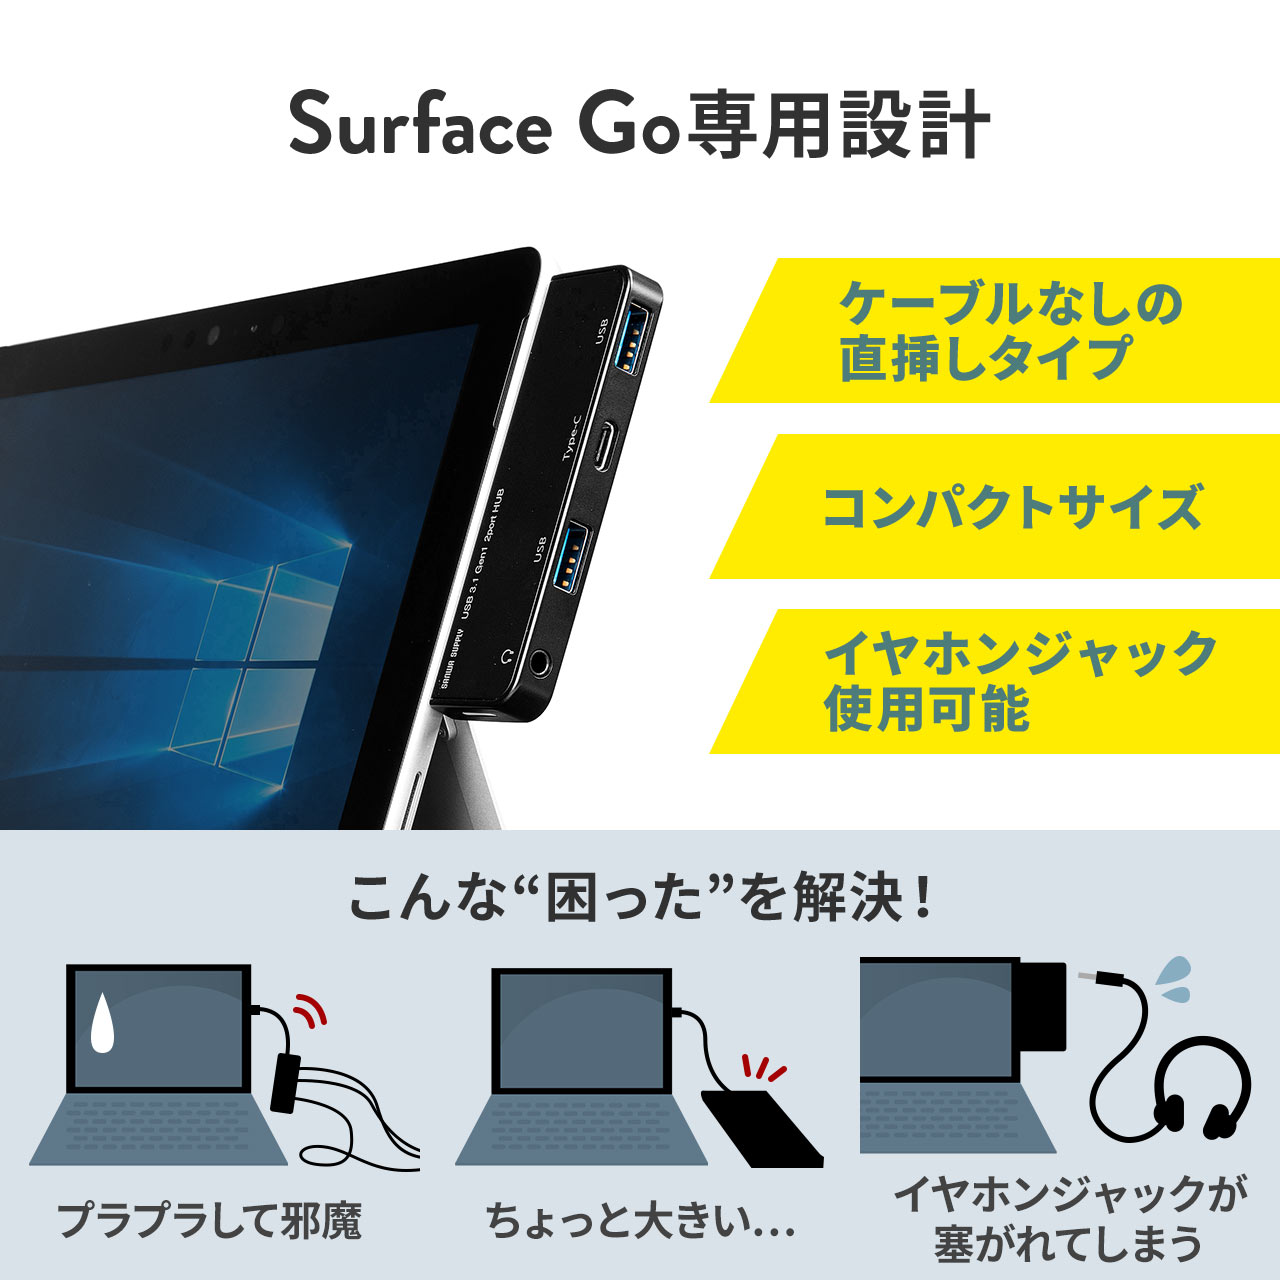 Surface Go/Go 2/Go 3p USB3.1nu USB Type-C USB A|[g~2|[g USB3.1 Gen1 3.5mm4Ƀ~jWbN oXp[EubN 400-HUB072BK